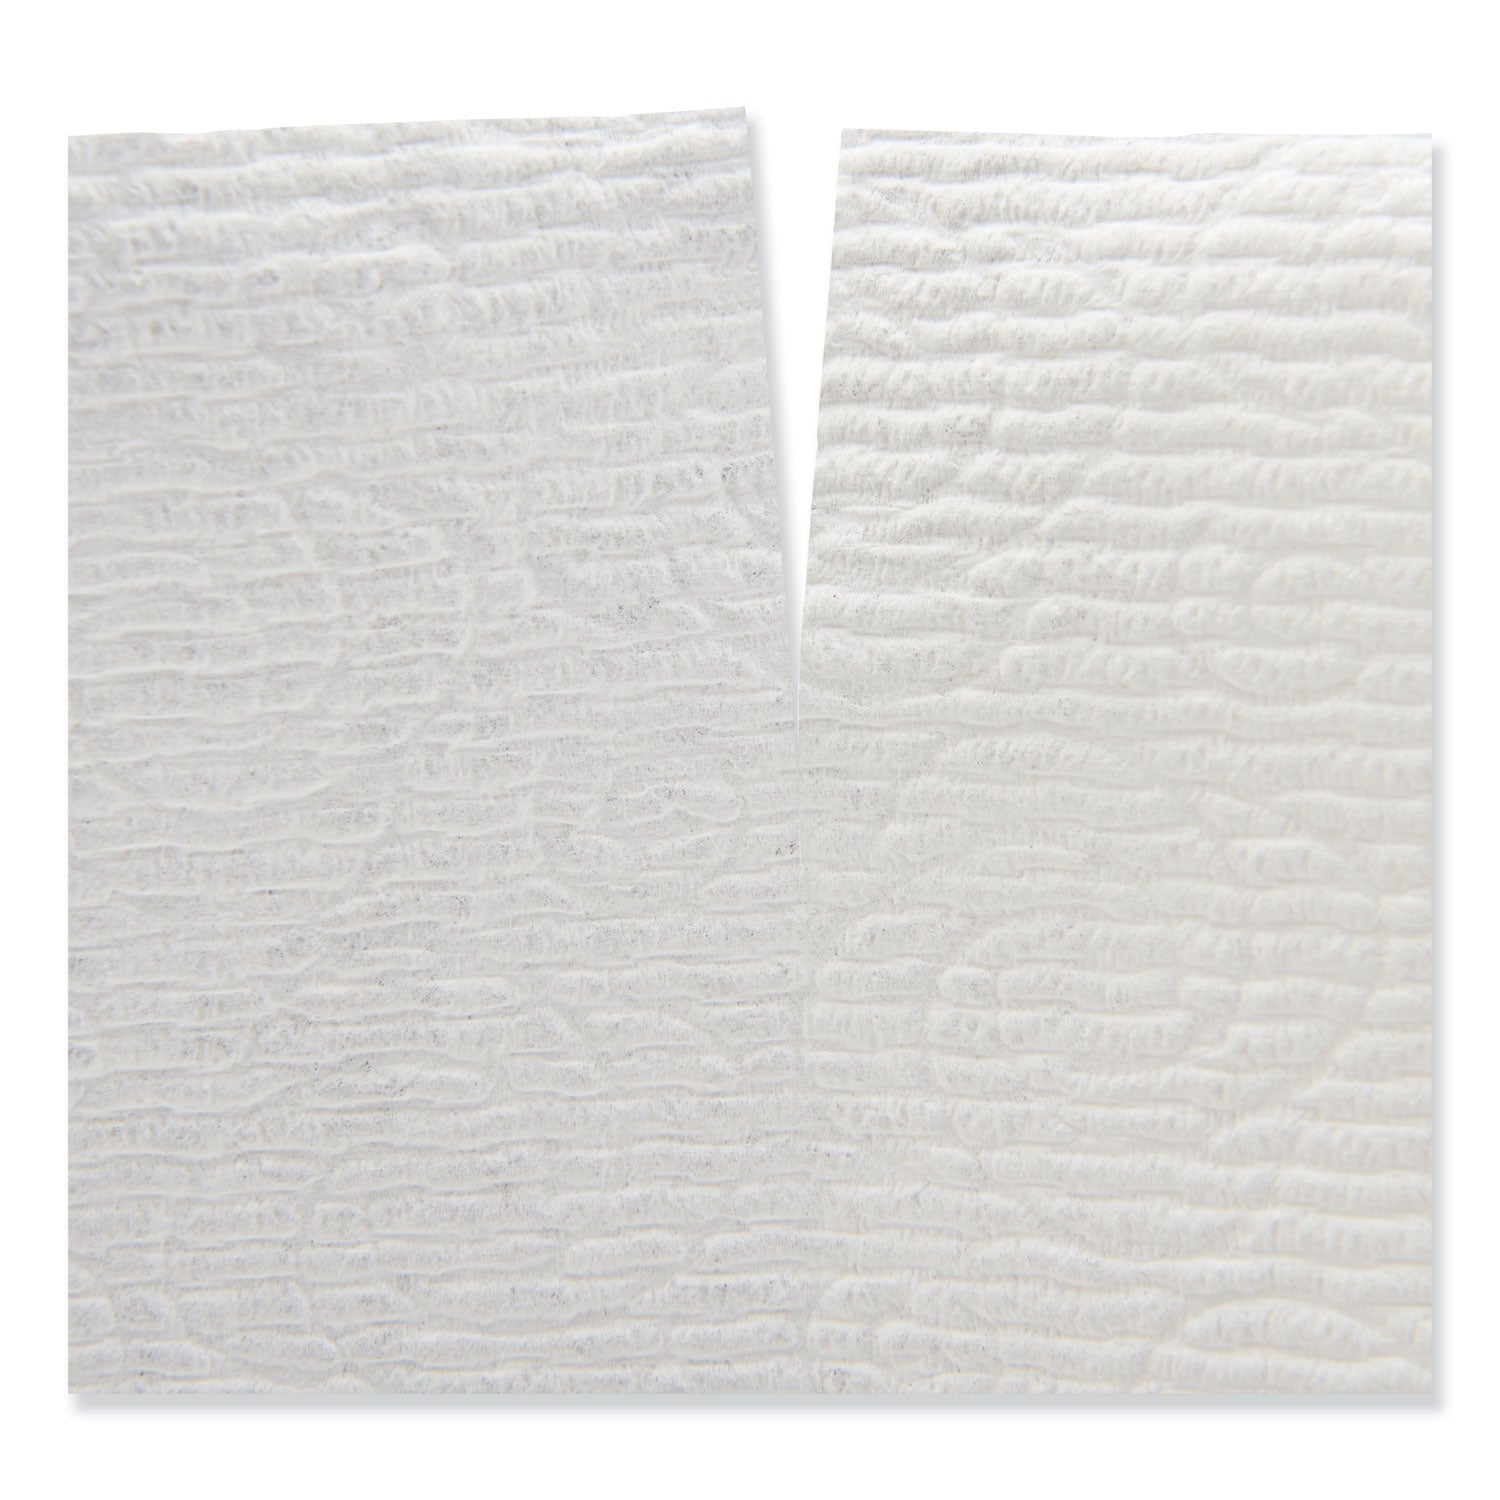 choose-a-sheet-mega-kitchen-roll-paper-towels-1-ply-48-x-11-white-102-roll-24-carton_kcc47031 - 3